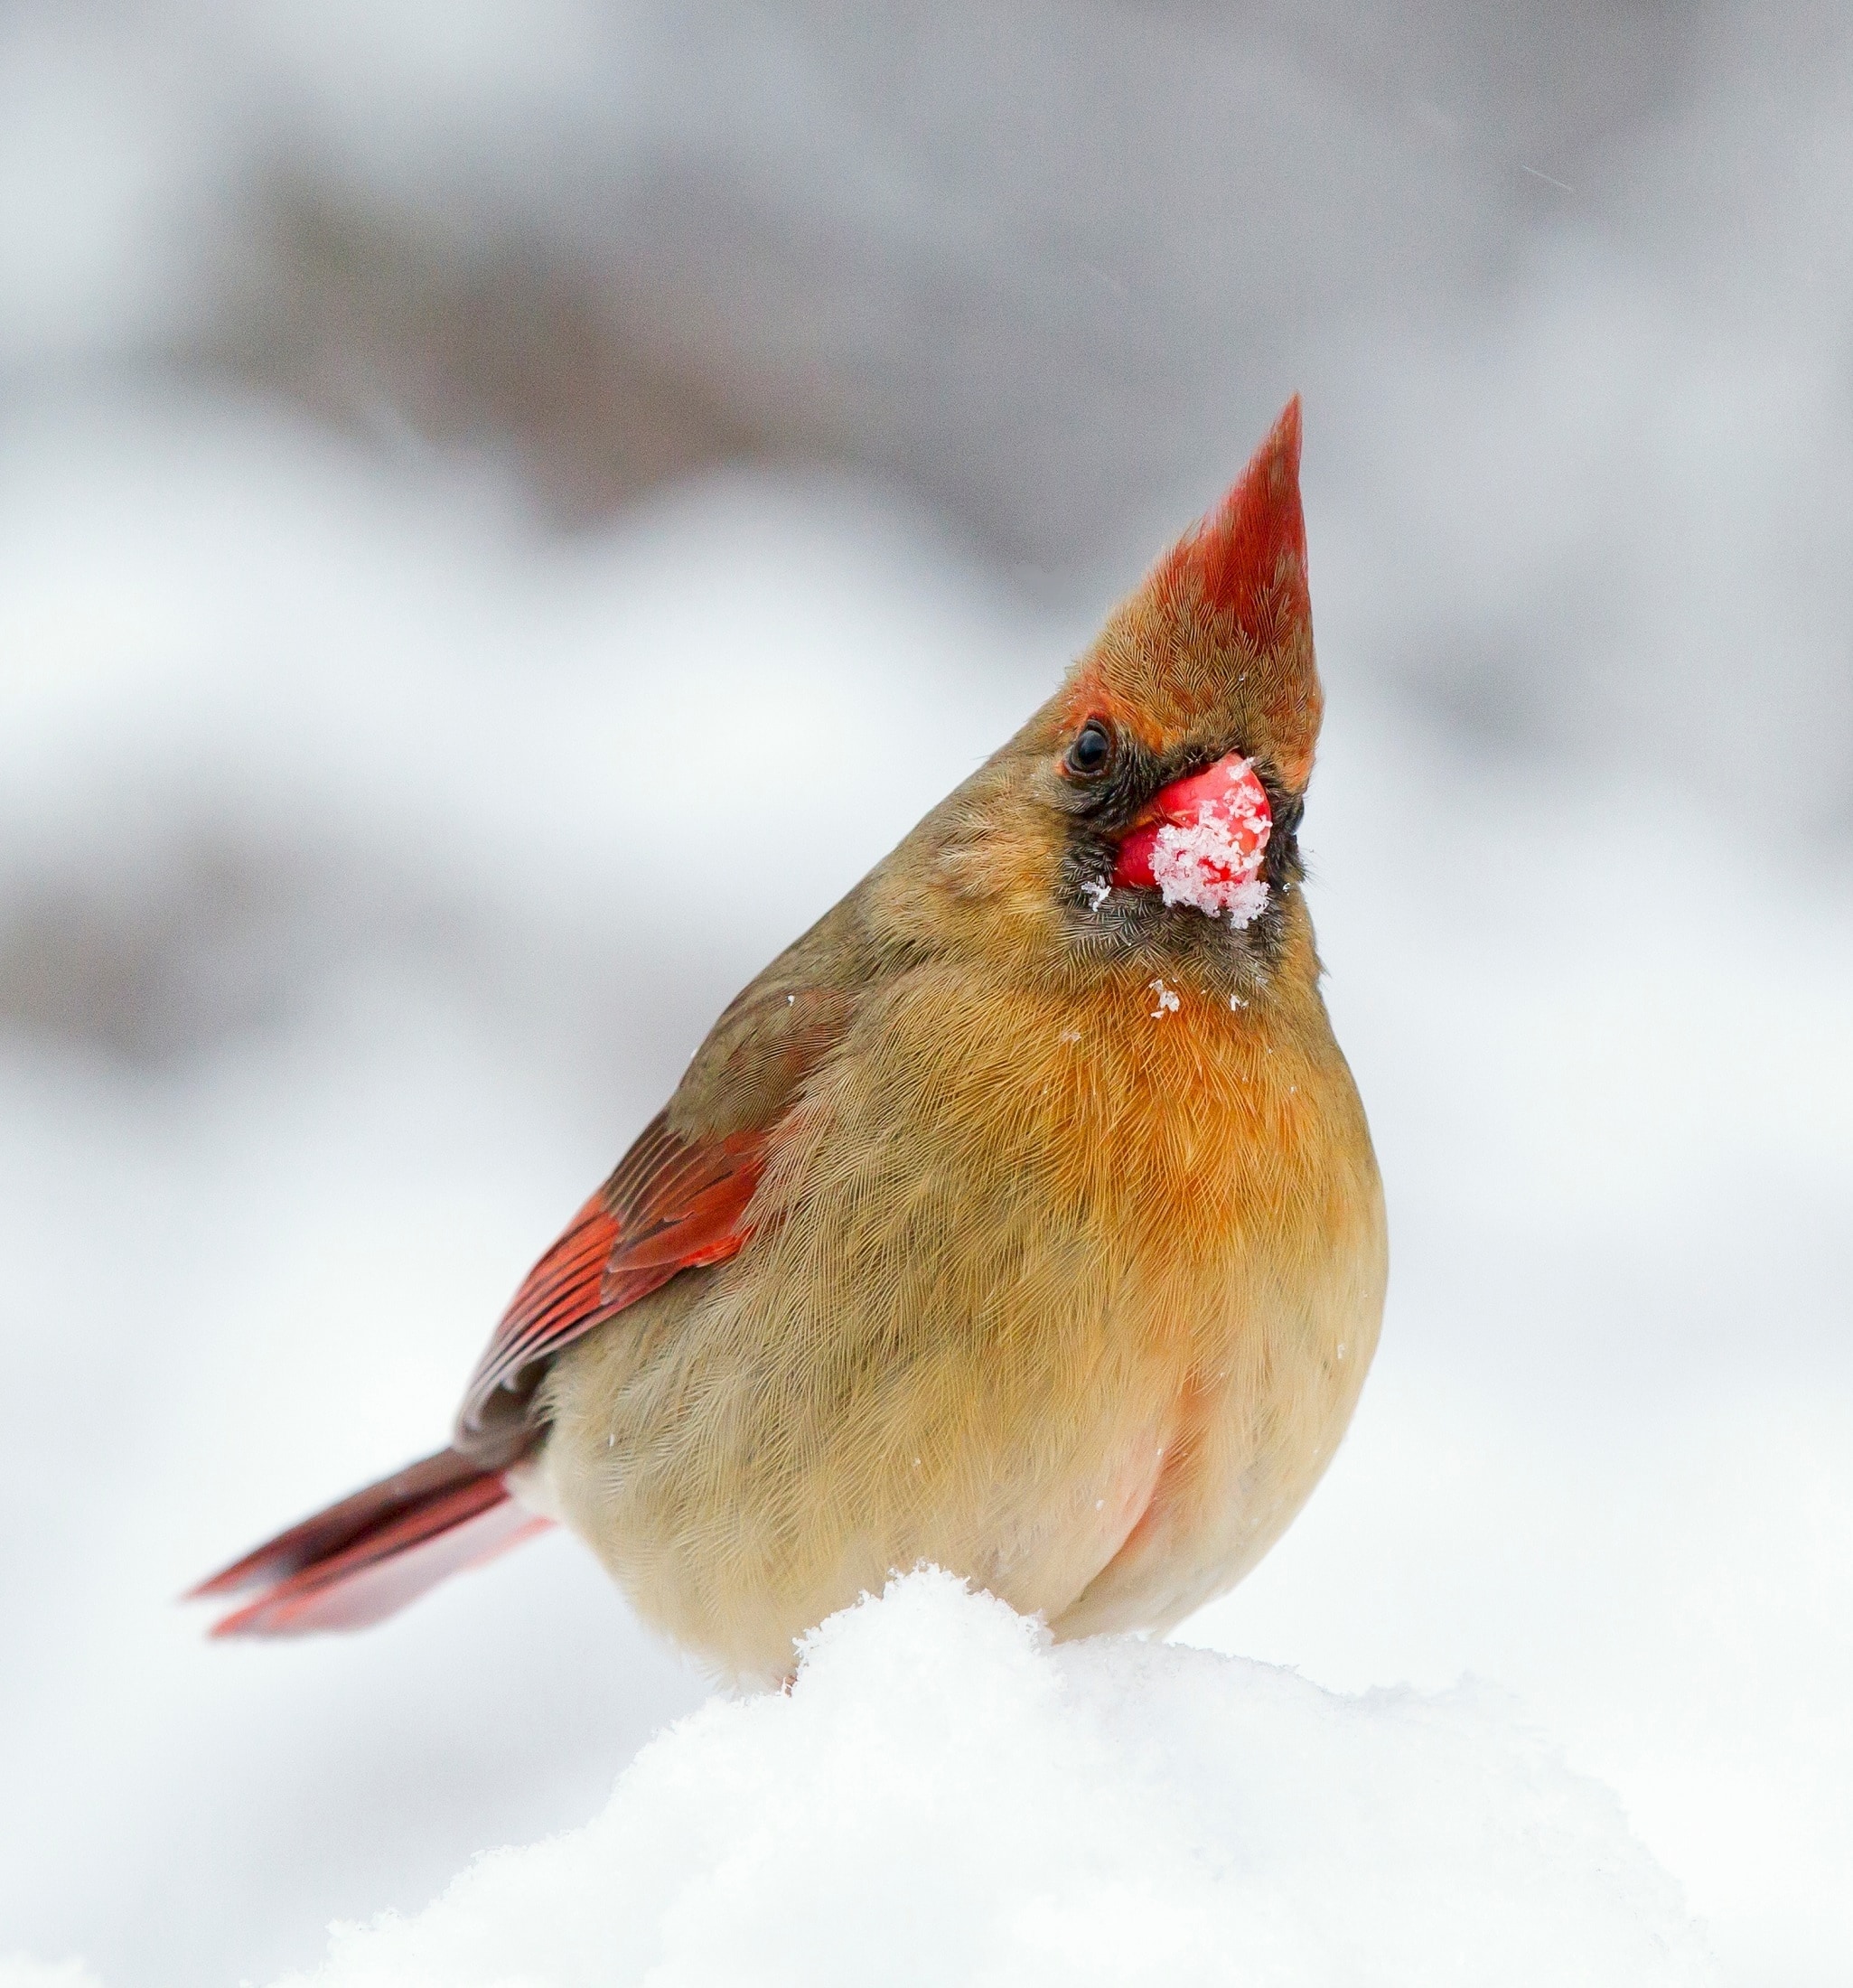 Snow, Winter, Bird, Female, Cardinal, red, one animal